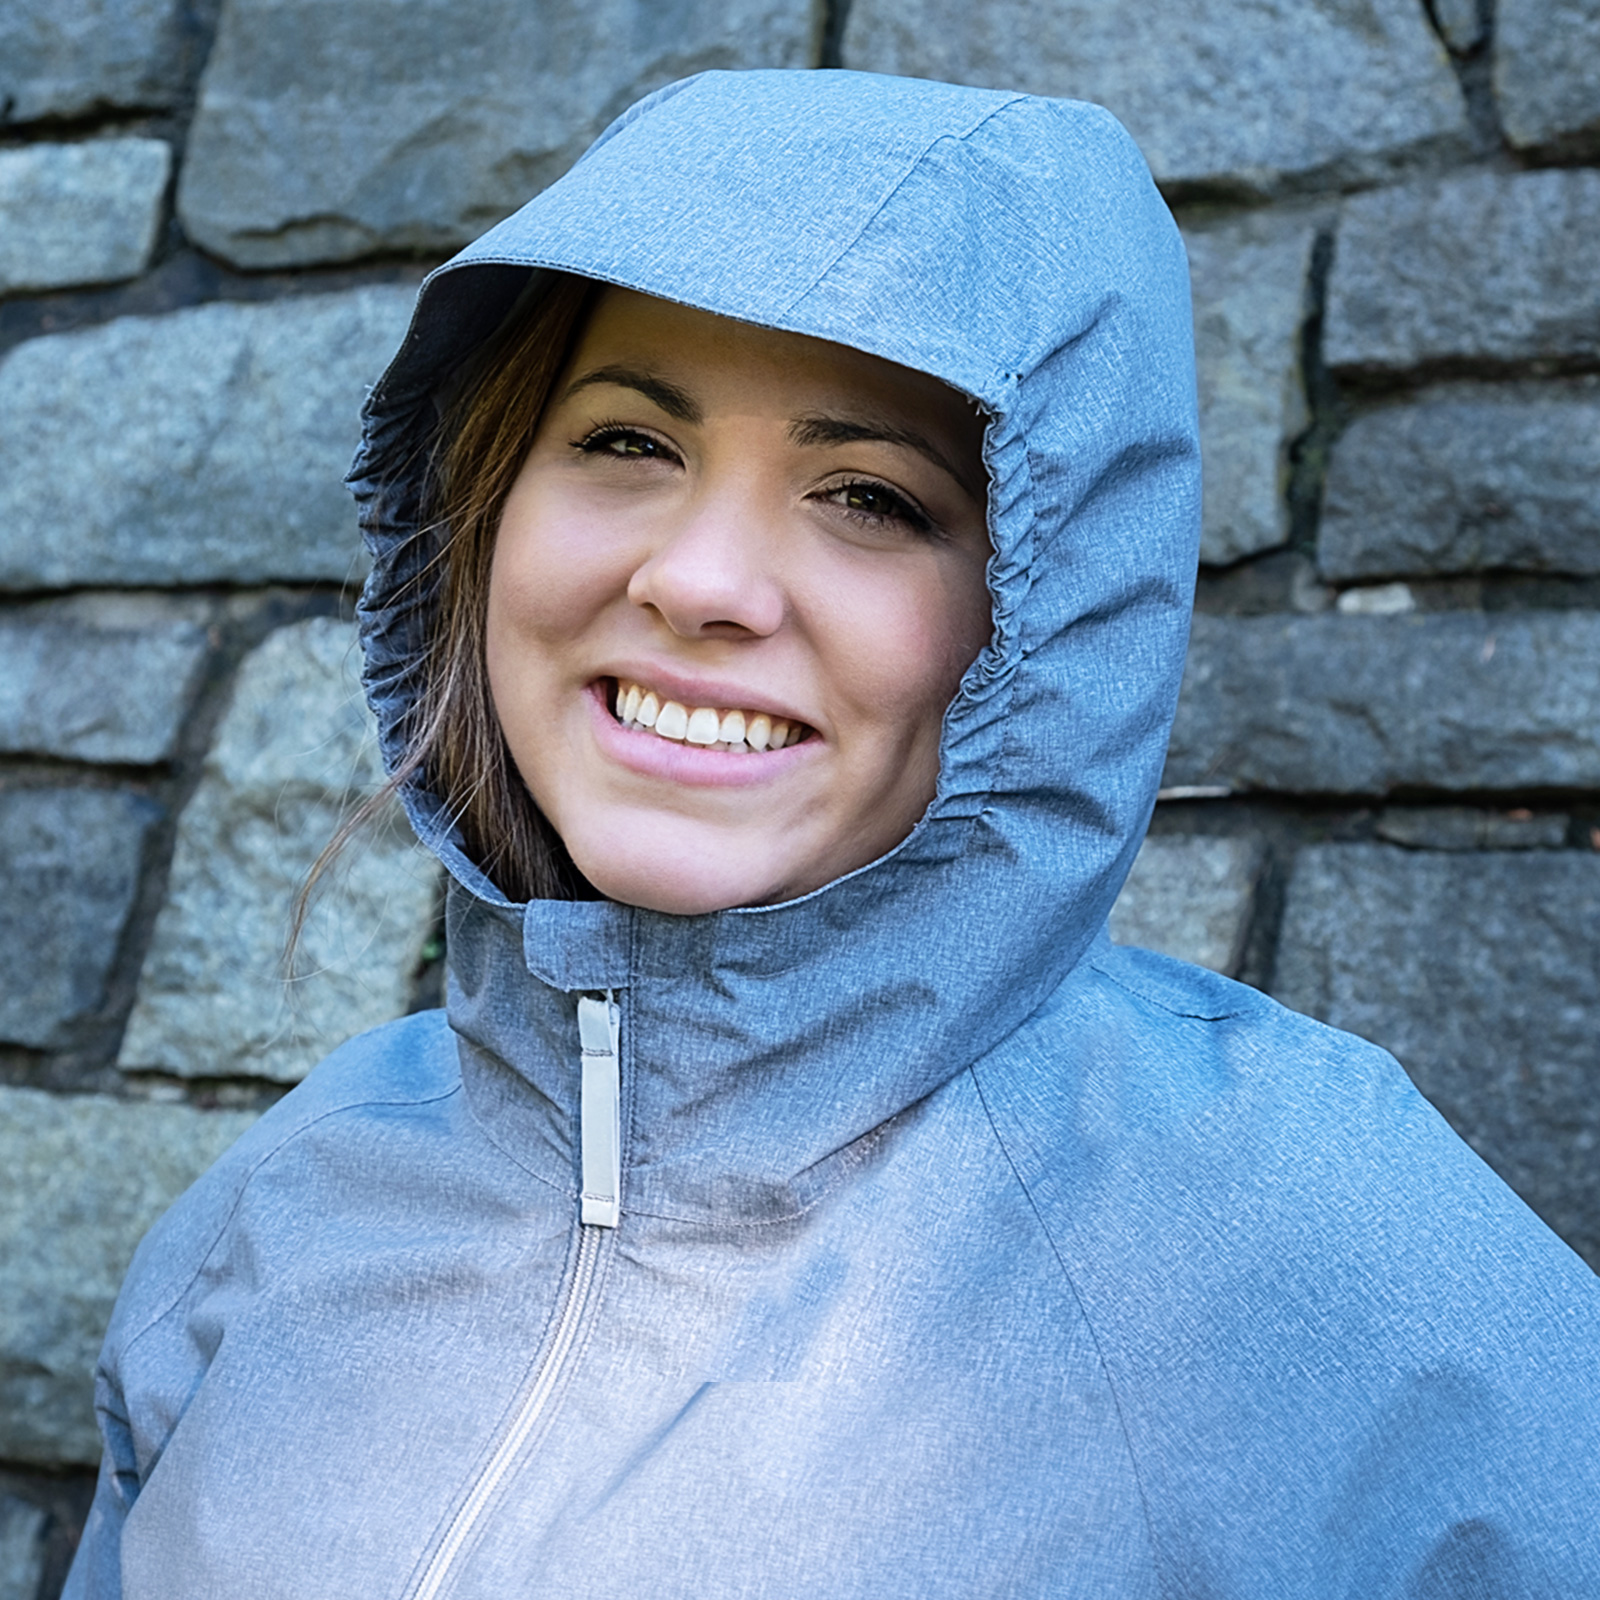 JAN & JUL Waterproof Rain-Coat for Women Thigh-Length Jacket (Heather Grey, Size L) - image 5 of 7